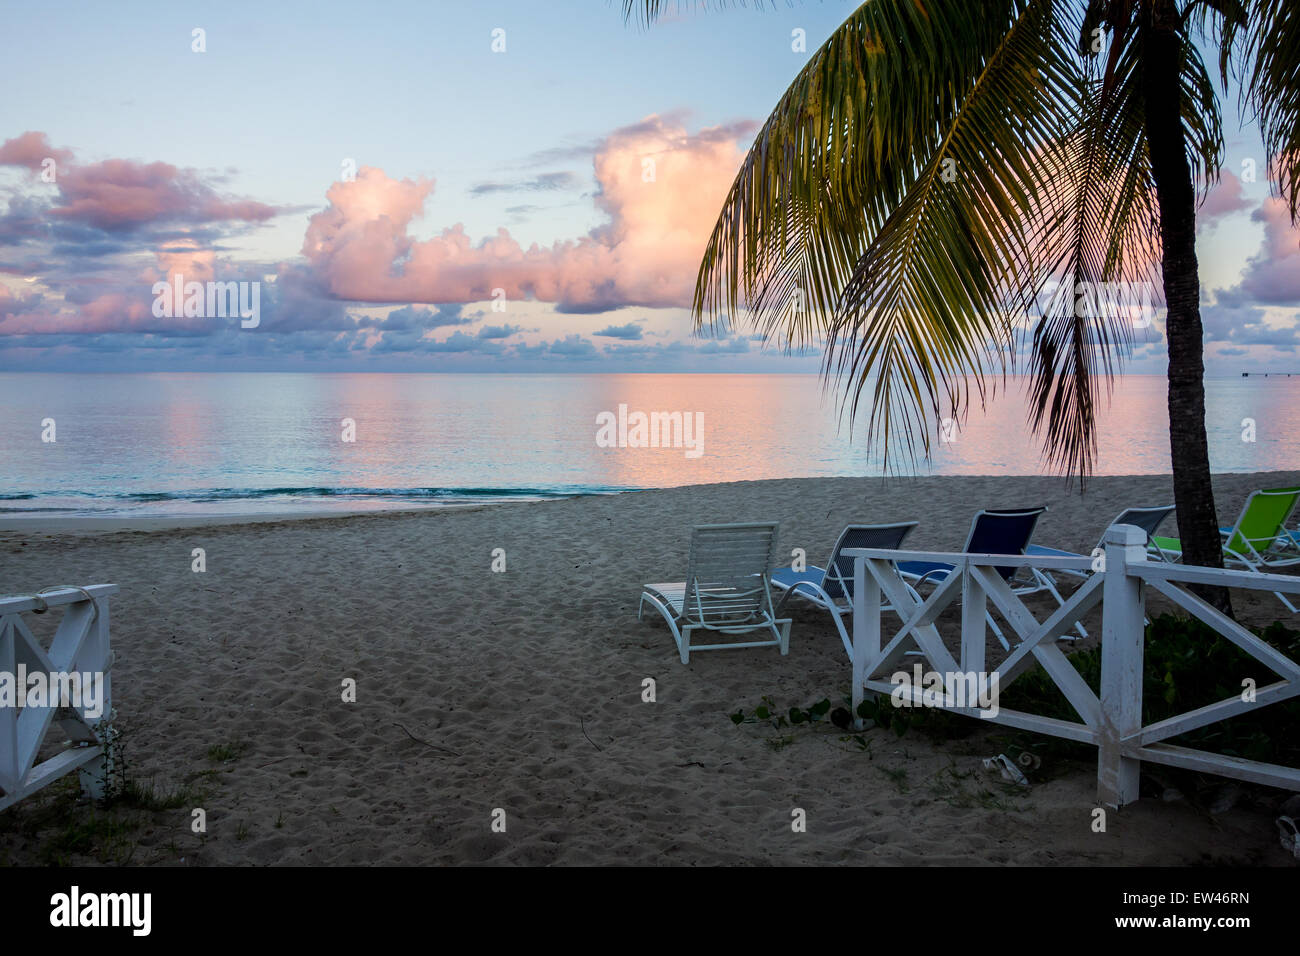 Sunrise viewed from a beach resort on the island of St. Croix, U. S. Virgin Islands. Stock Photo